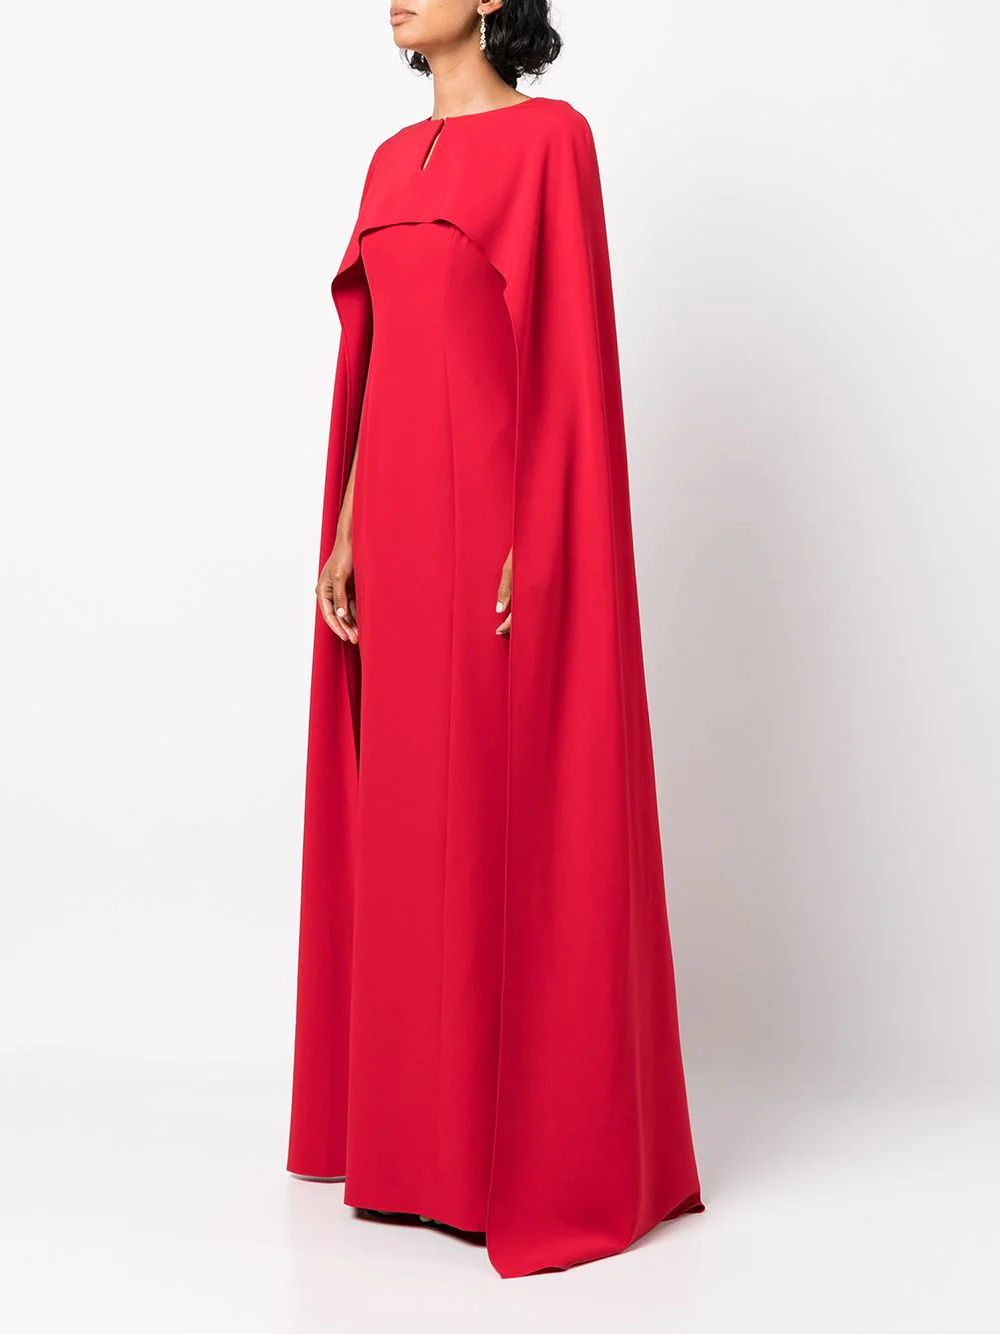 modern red cape wedding gown